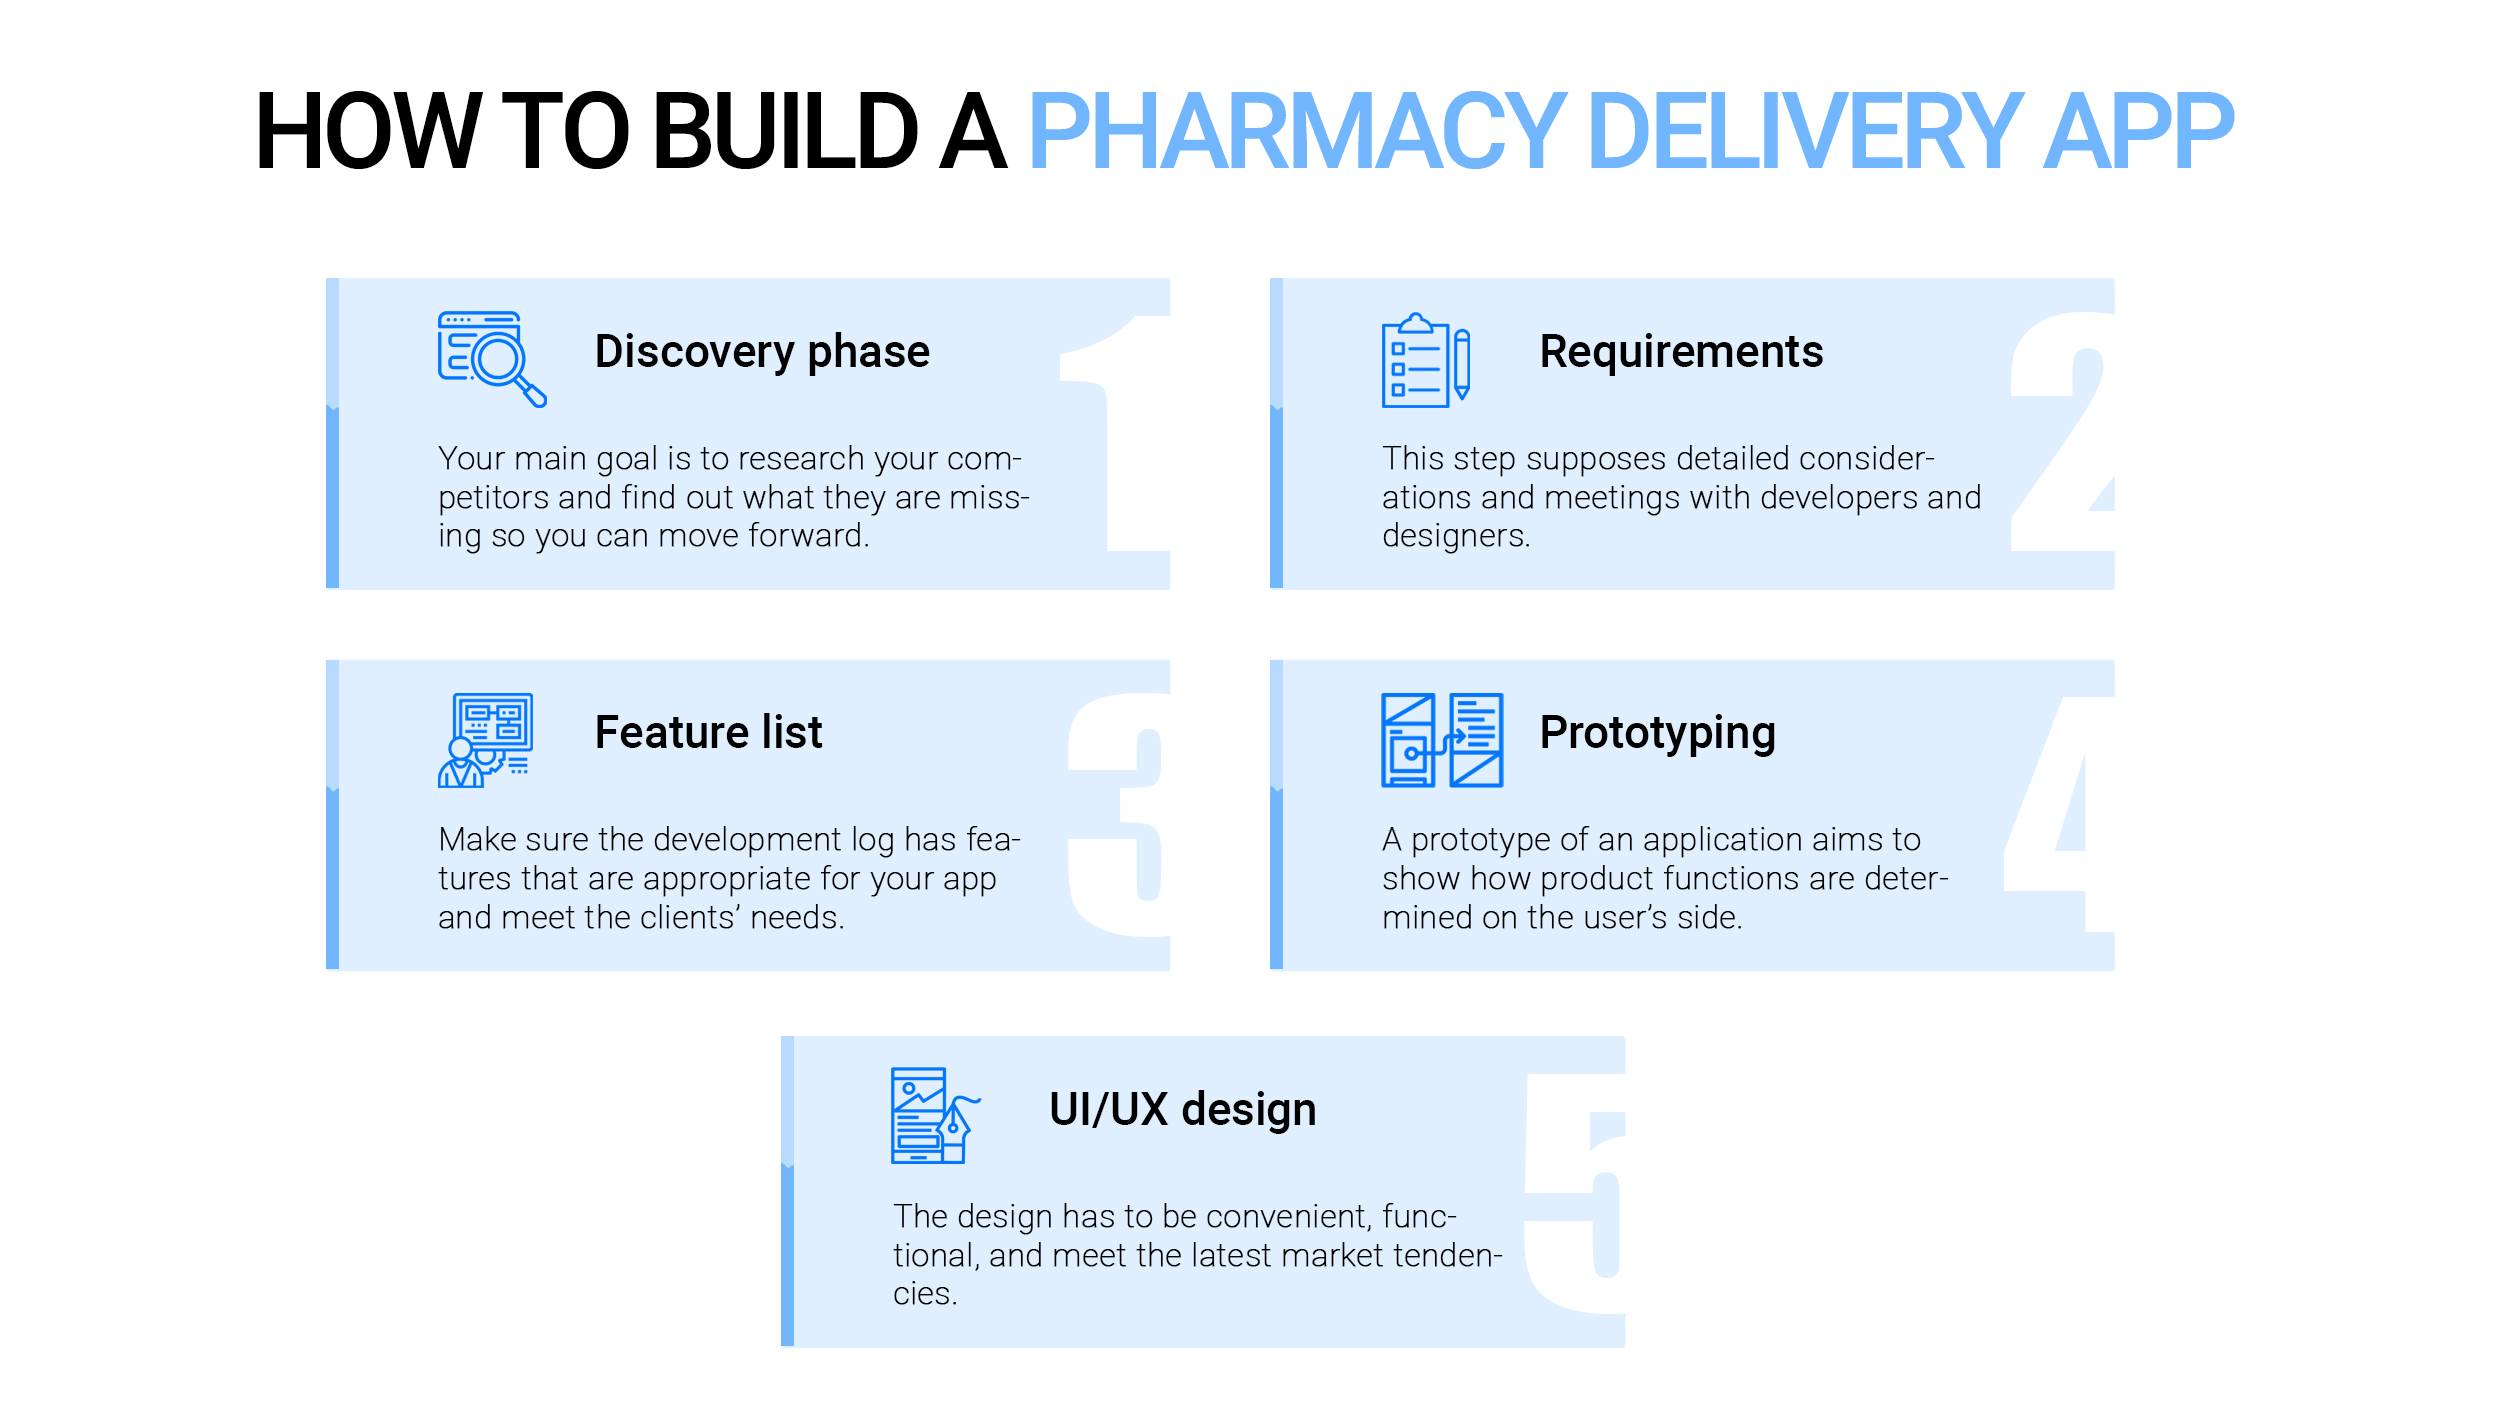 Main steps for pharmacy delivery app development